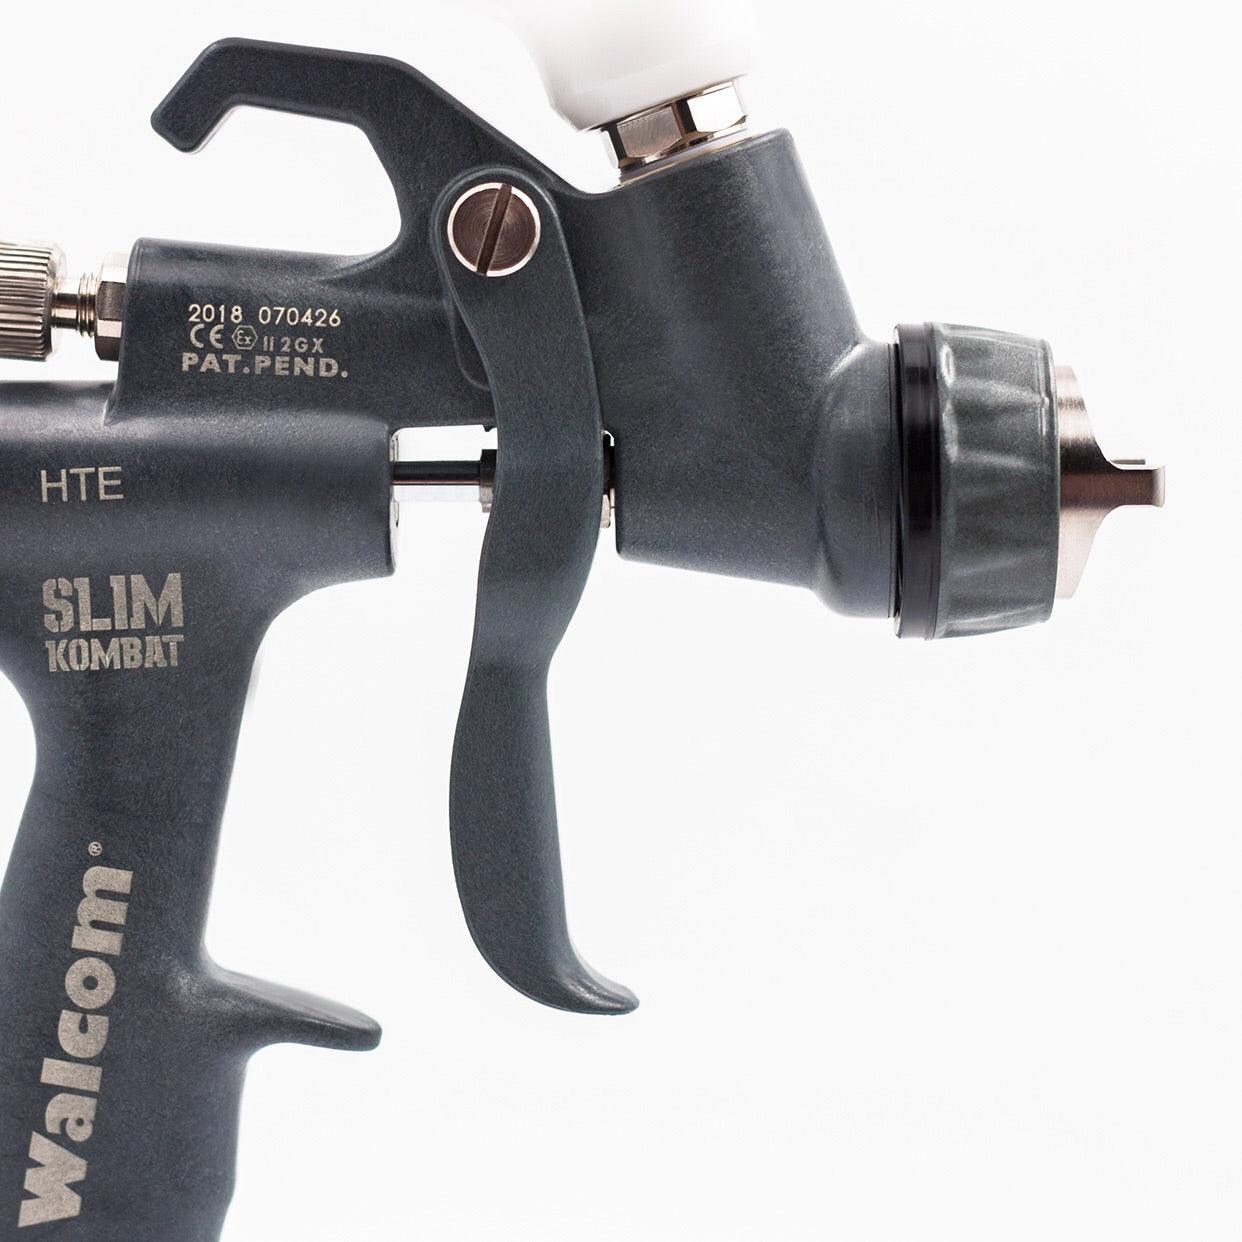 Walcom Slim Kombat HTE Kit | The Spray Source | Spray Paint Tools